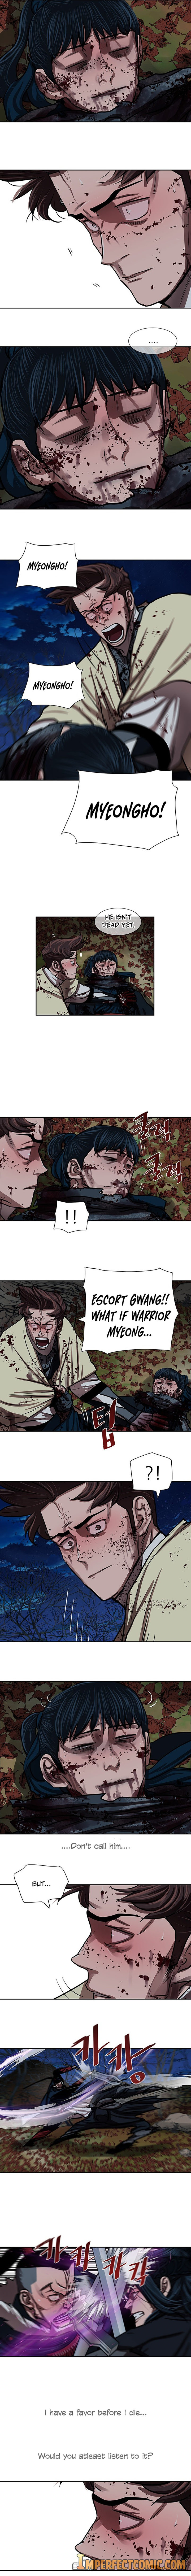 Escort Warrior - Chapter 141 Page 5